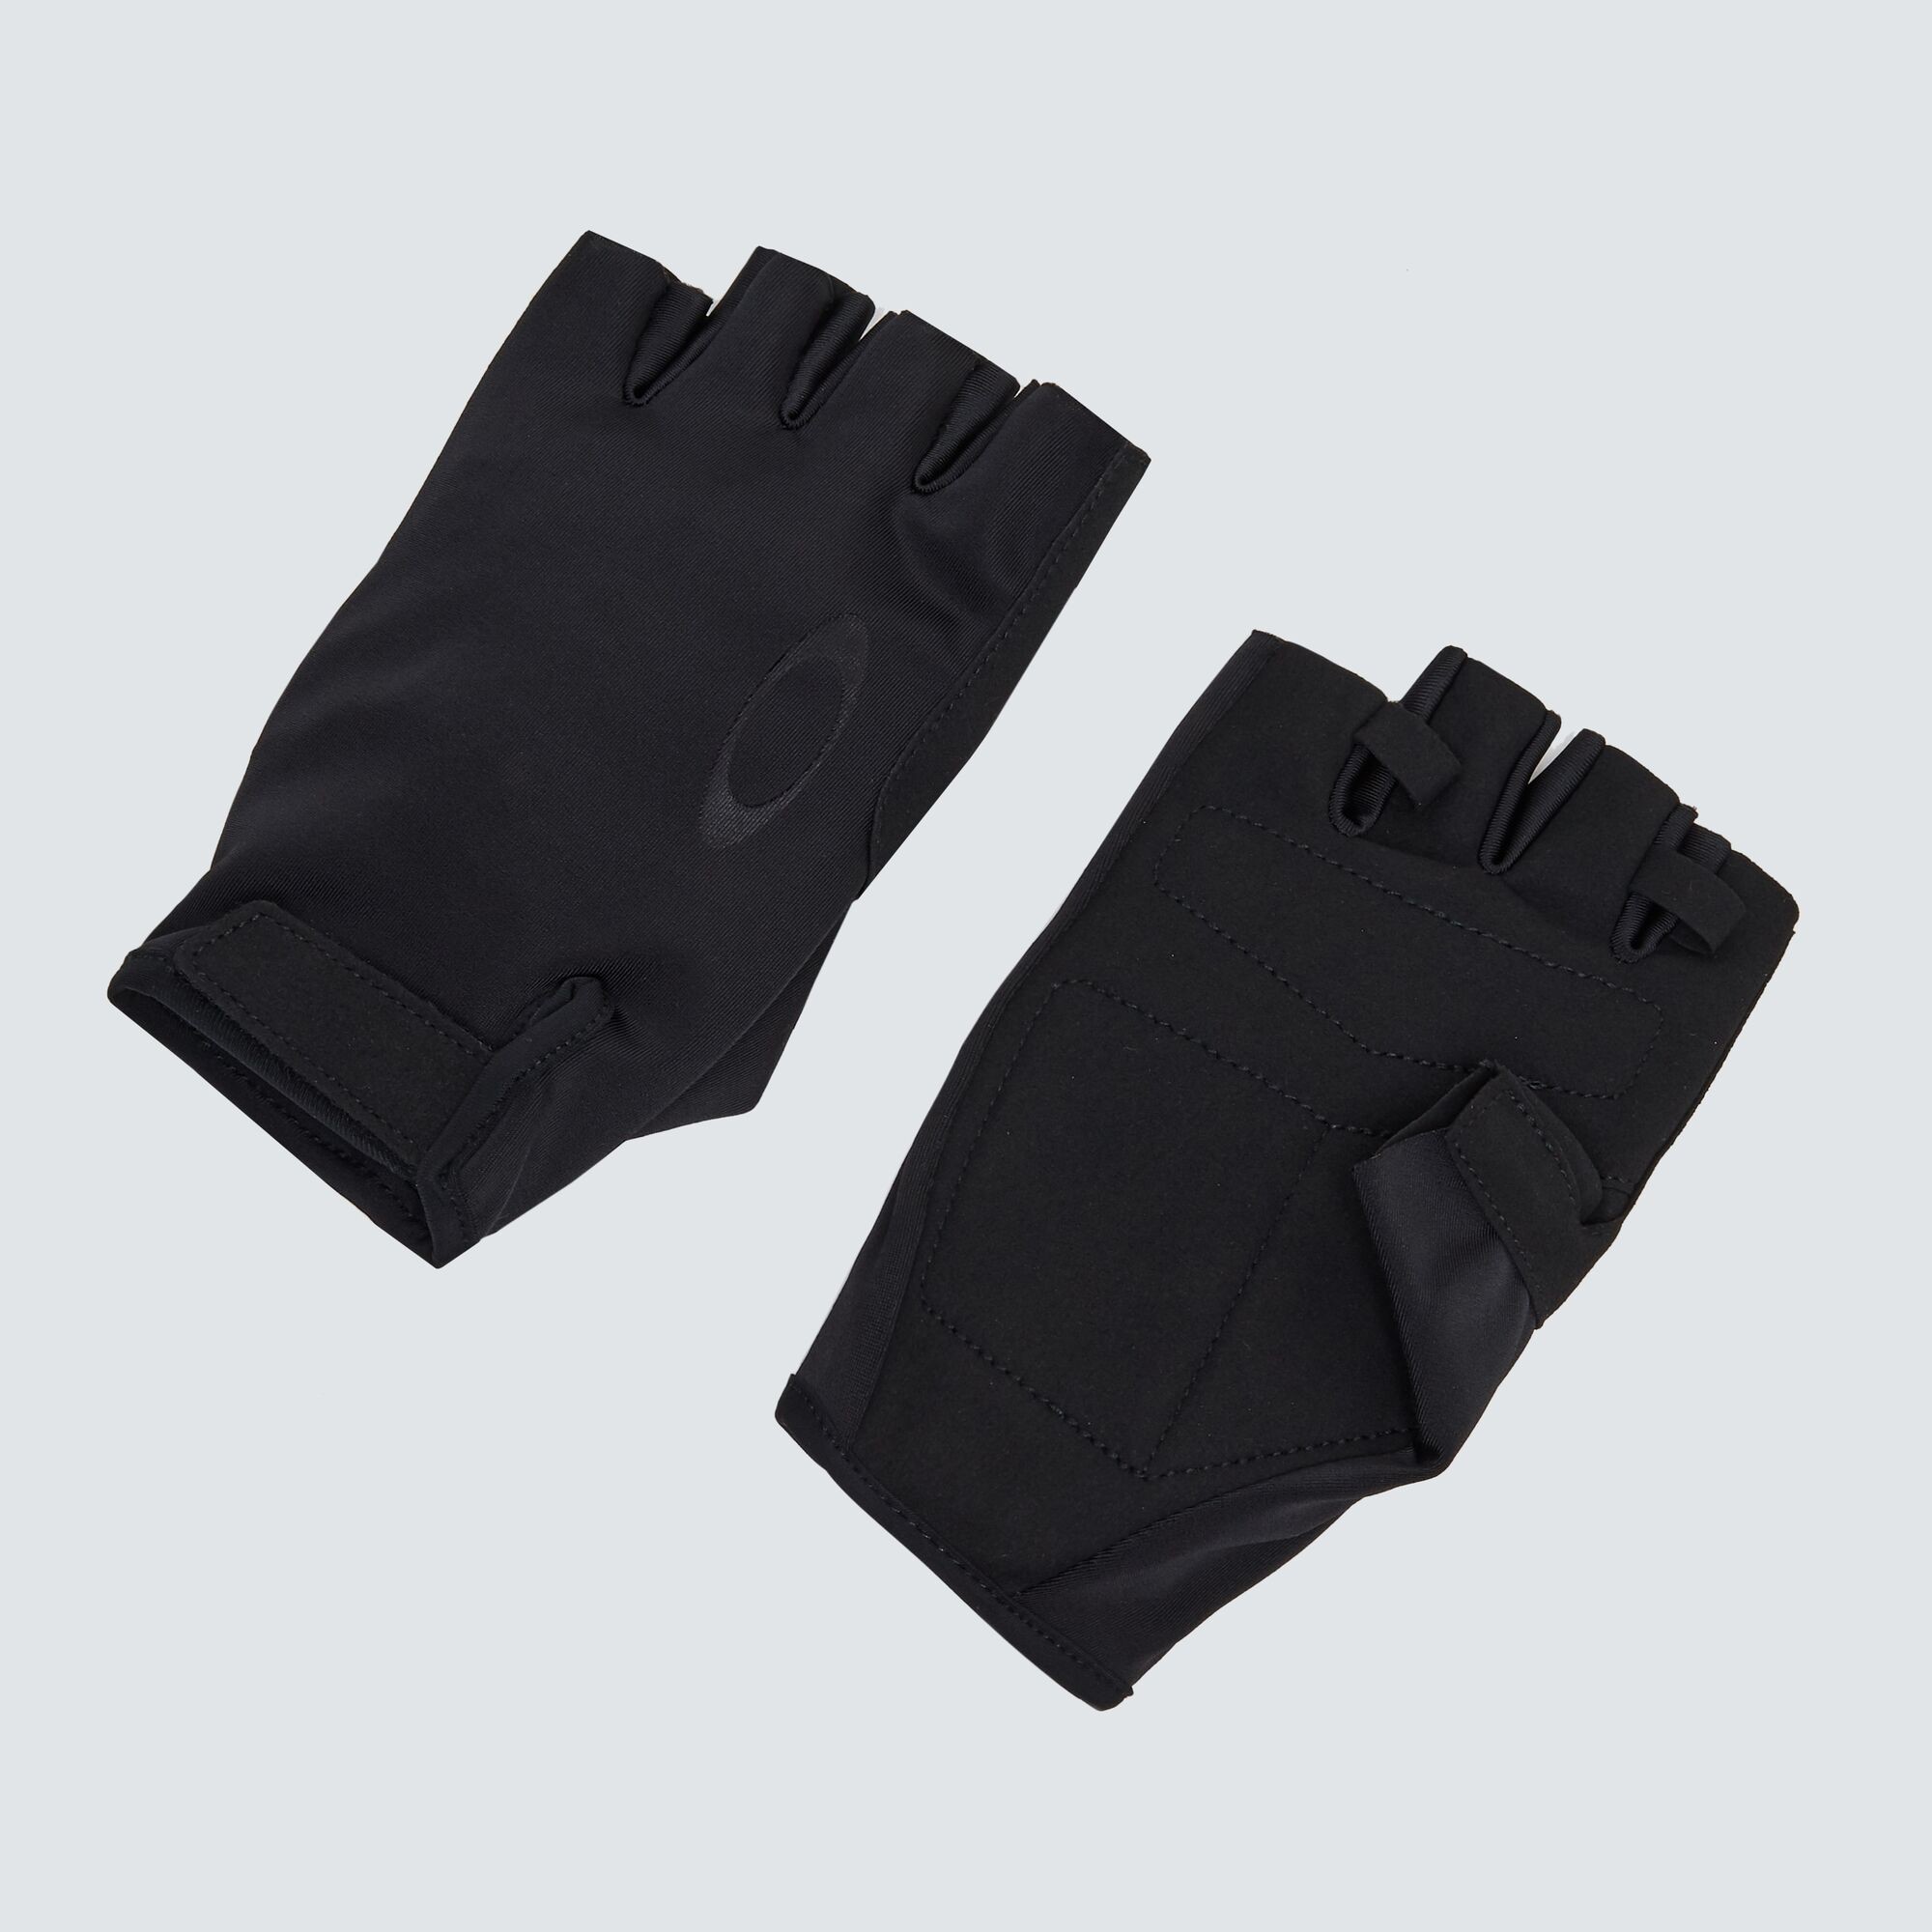 Oakley mitt 2.0 gants de cyclisme blackout noir